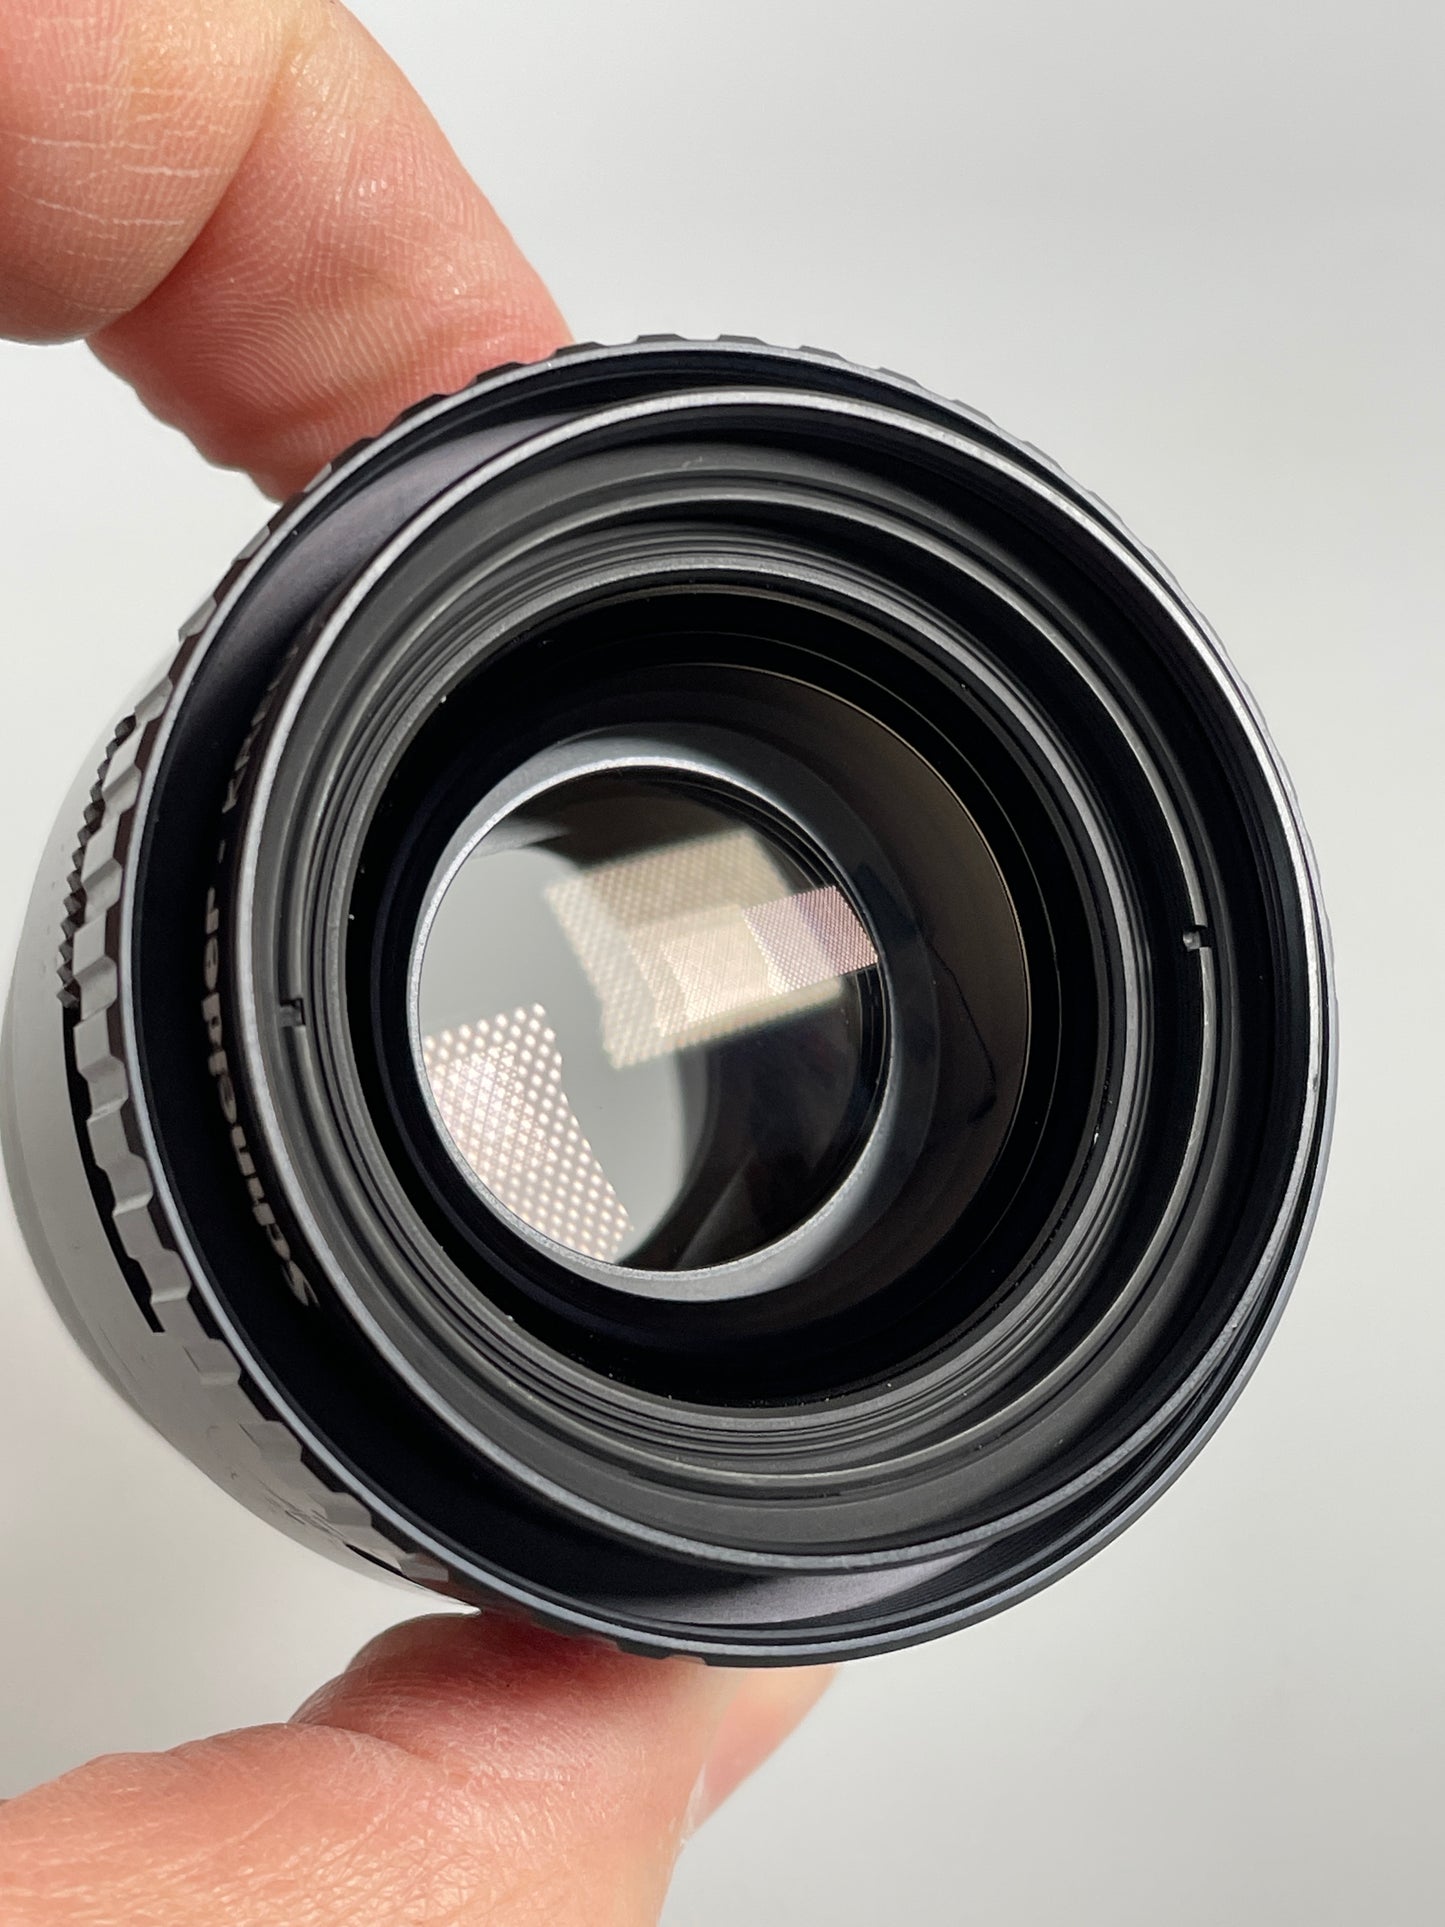 Schneider 135mm f5.6 Componon-S Enlarging Lens